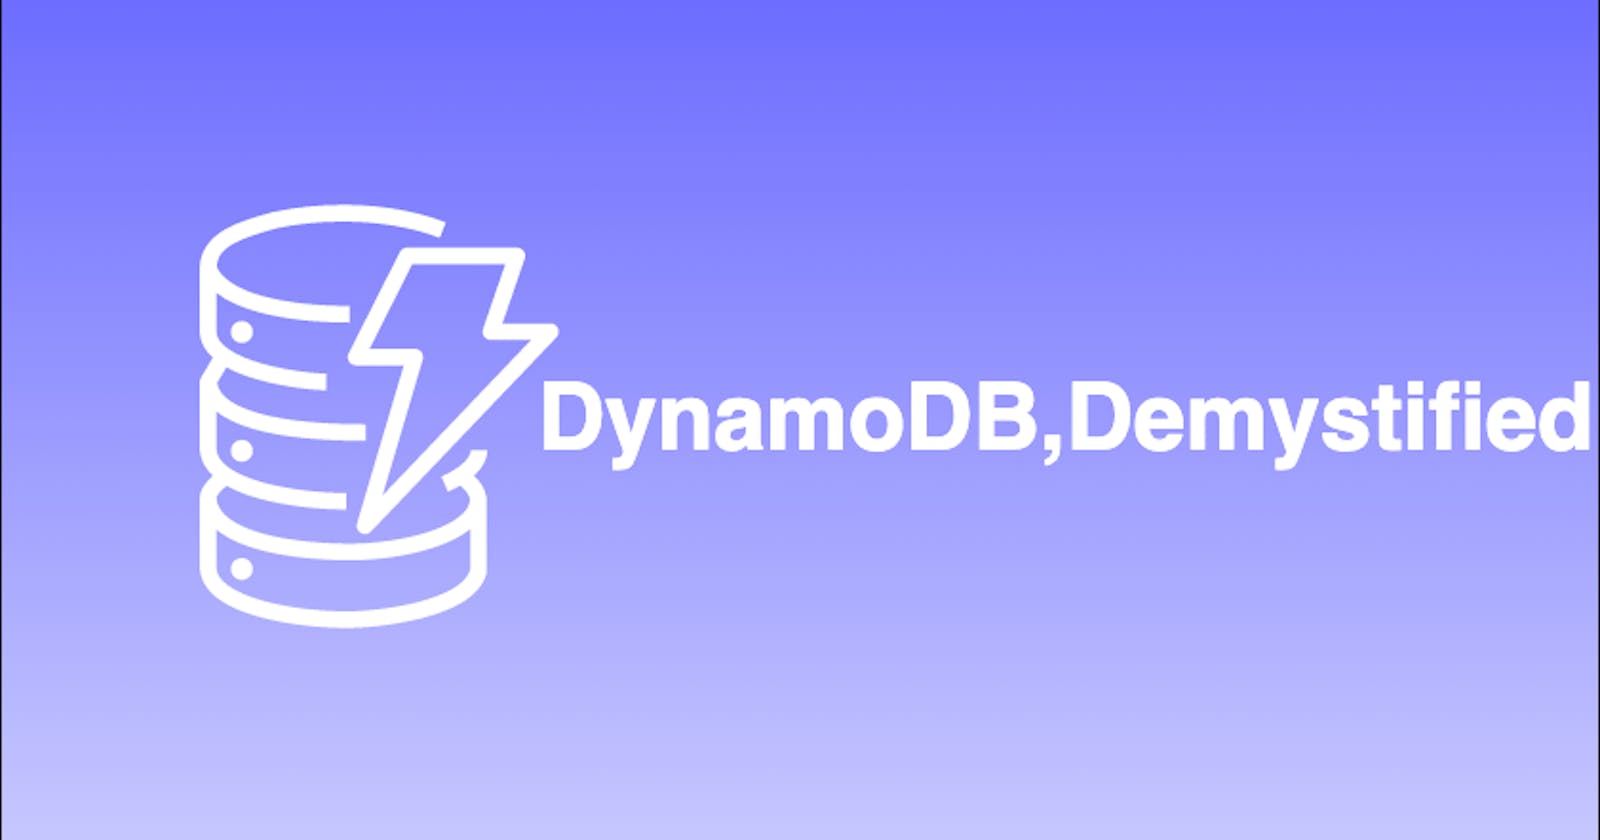 DynamoDB,Demystified(Chapter 4)